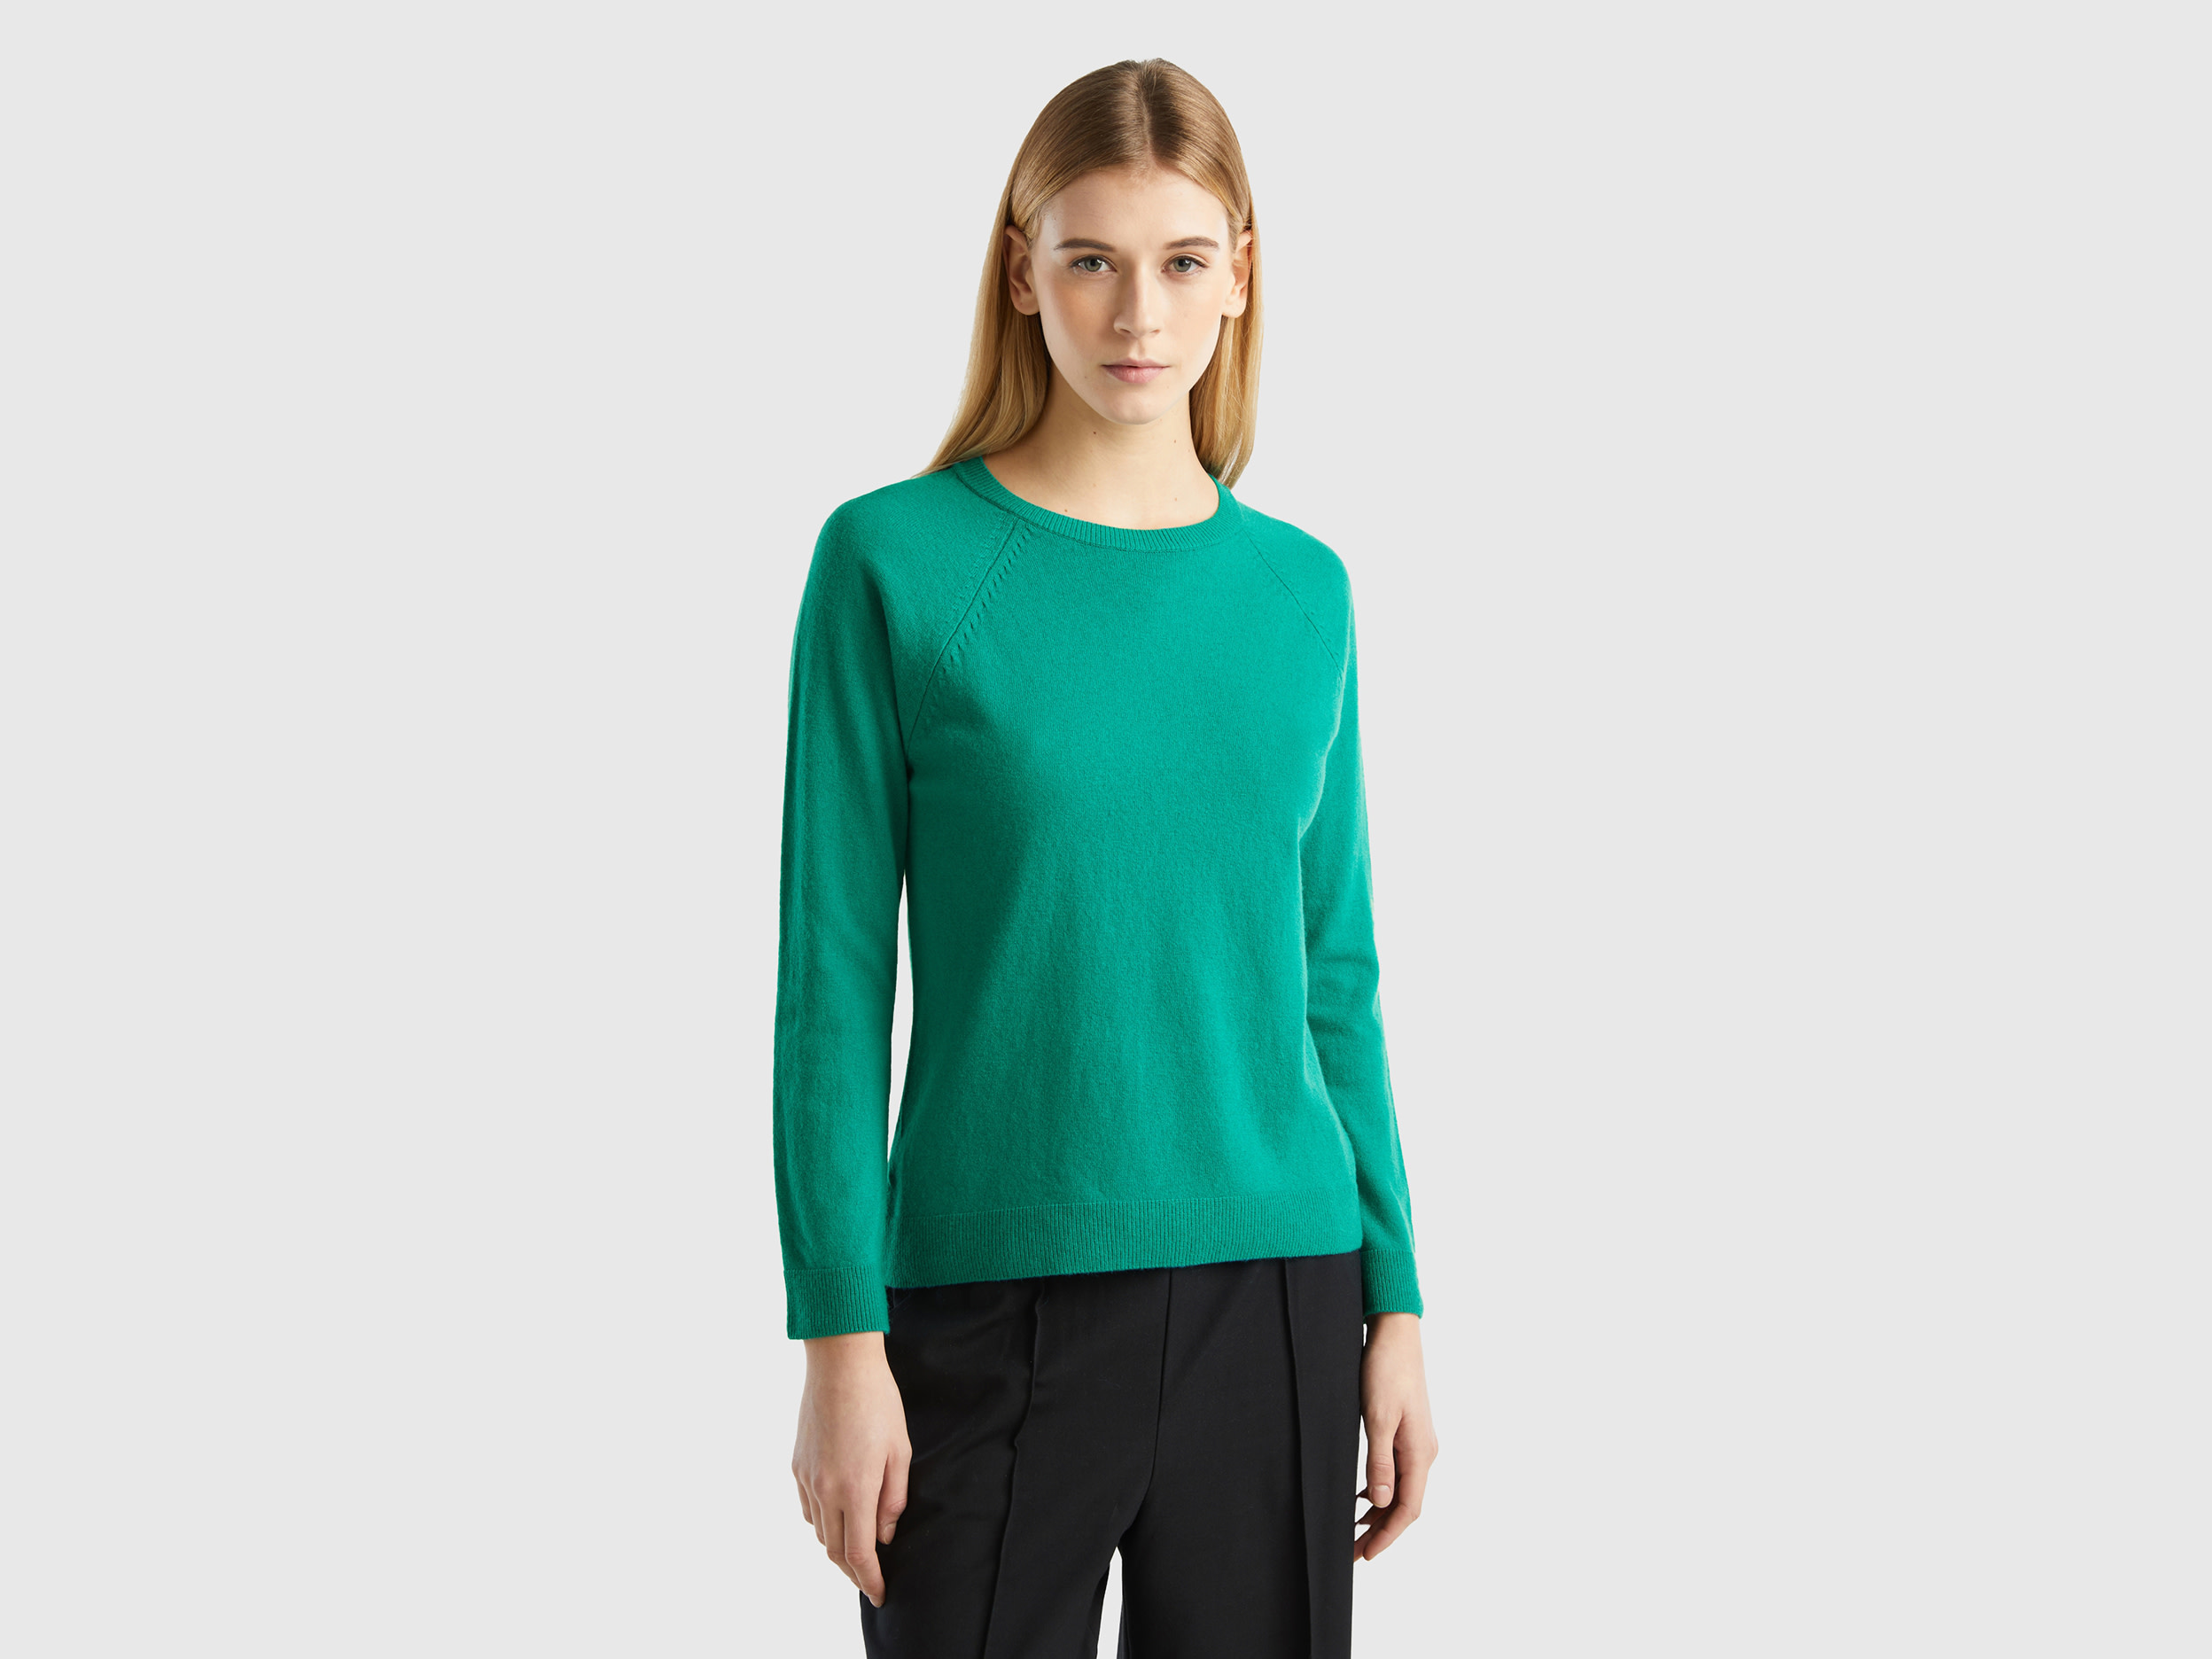 Benetton, Aqua Green Crew Neck Sweater In Wool And Cashmere Blend, size XS, Aqua, Women